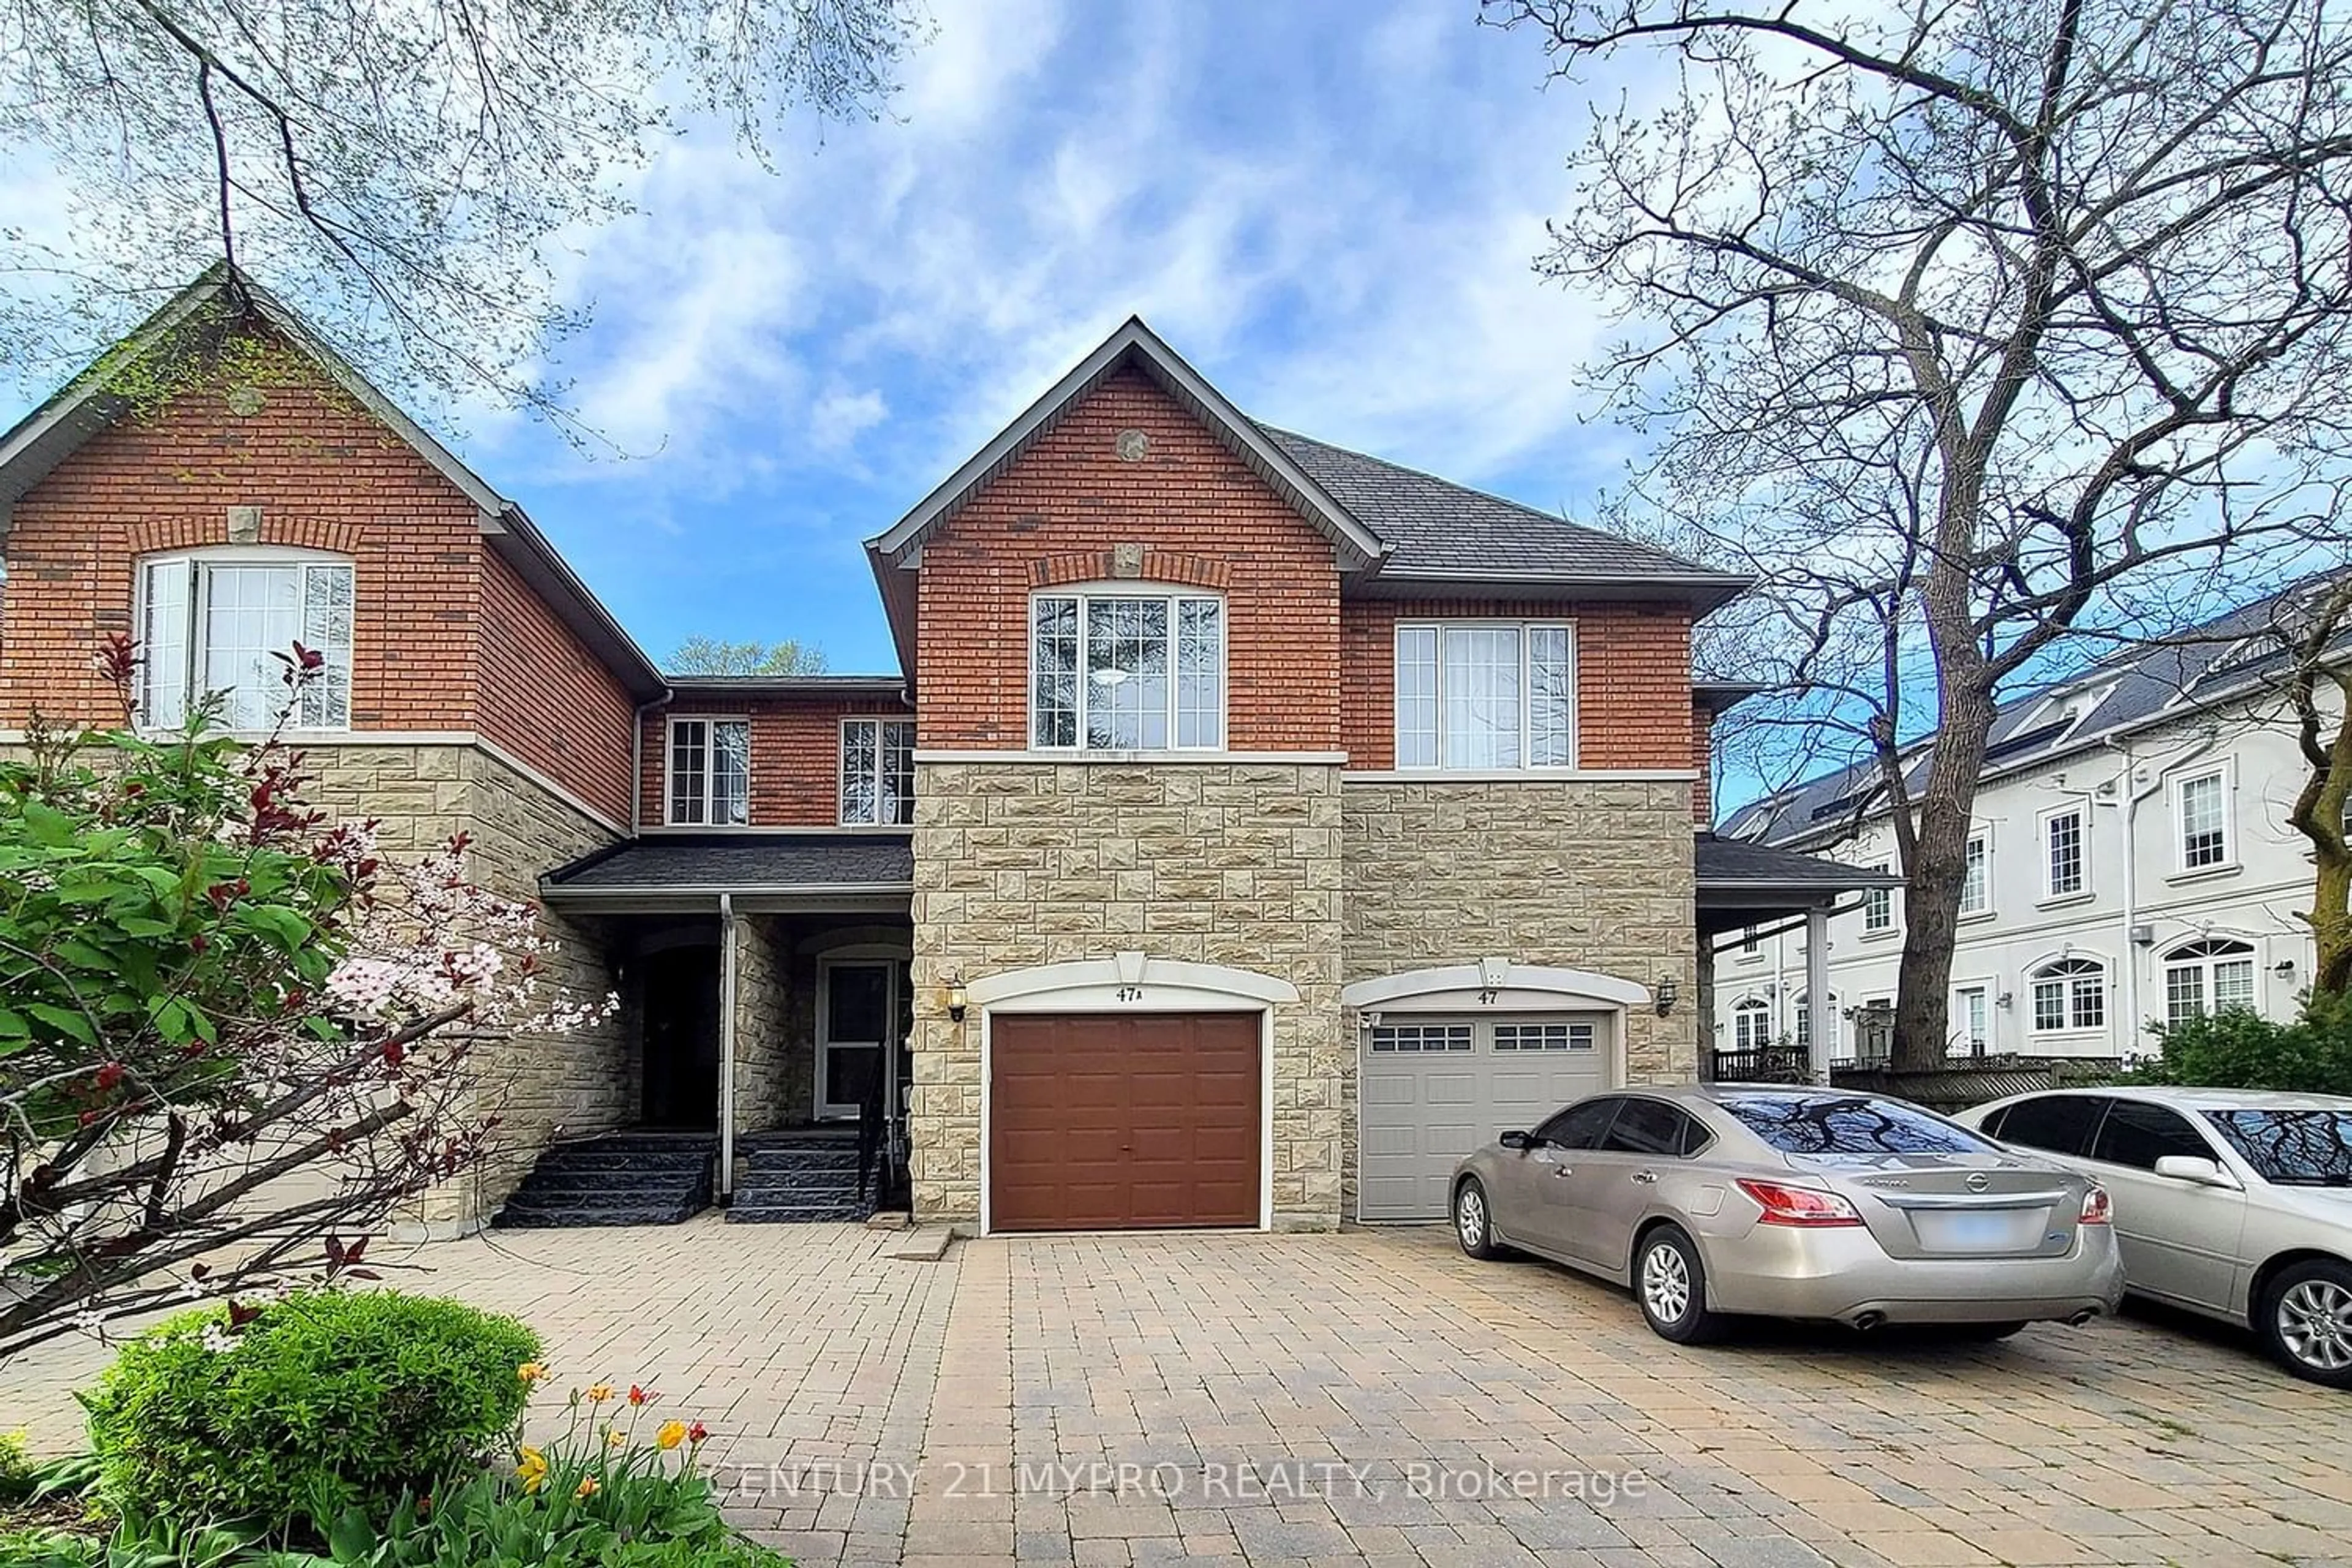 Home with brick exterior material for 47A Benson Ave, Richmond Hill Ontario L4C 4E5